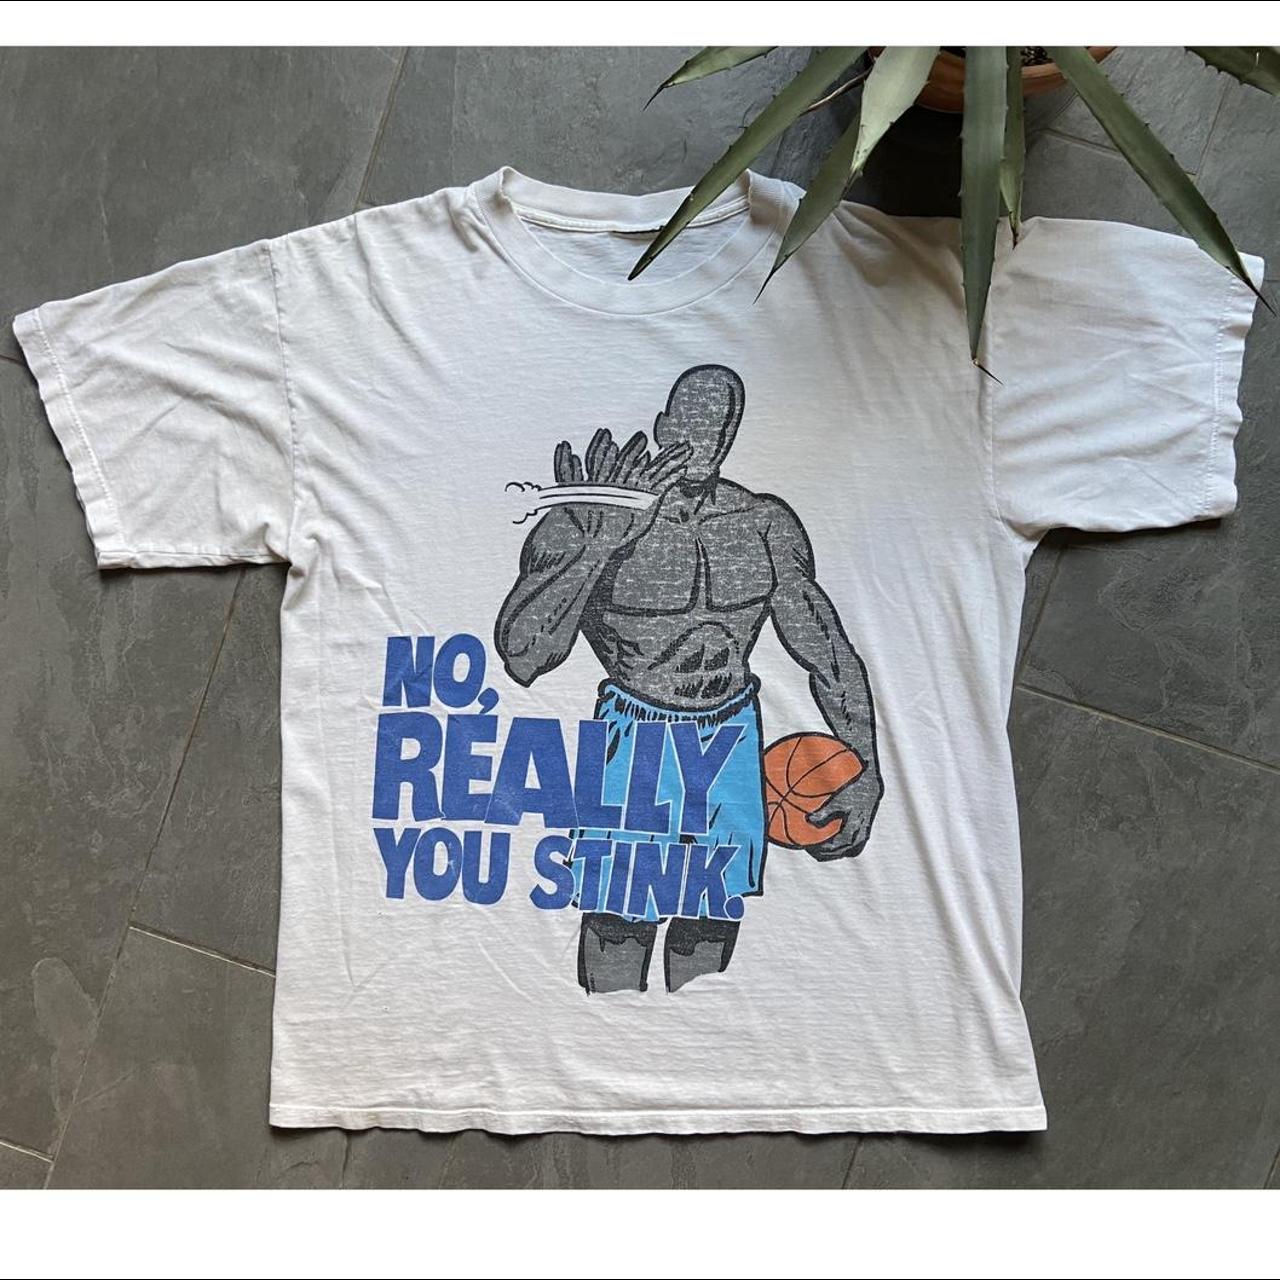  Trash Talker T-Shirt Funny Sports Trash Talking Shirt